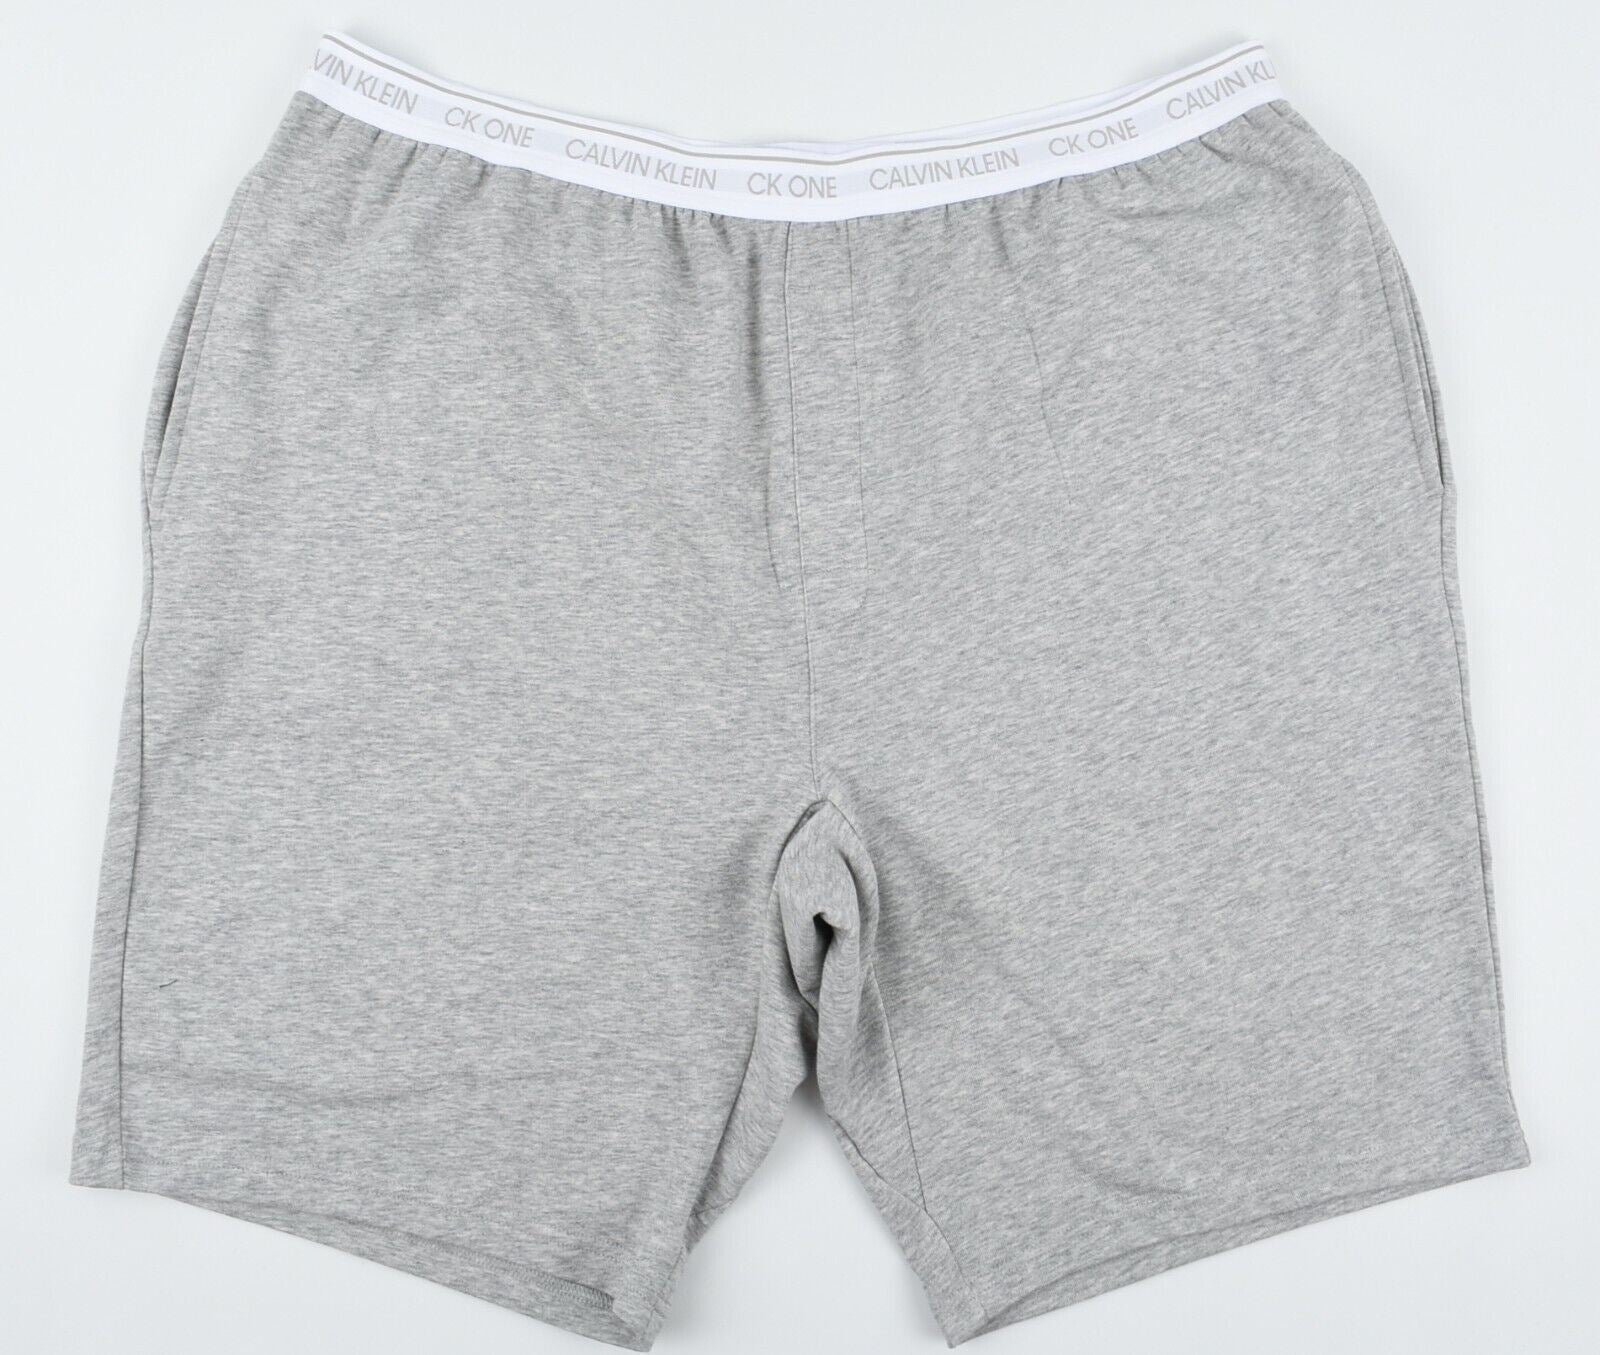 CALVIN KLEIN Sleepwear: CK ONE Men's Lounging Sweat Shorts, Grey, size XL